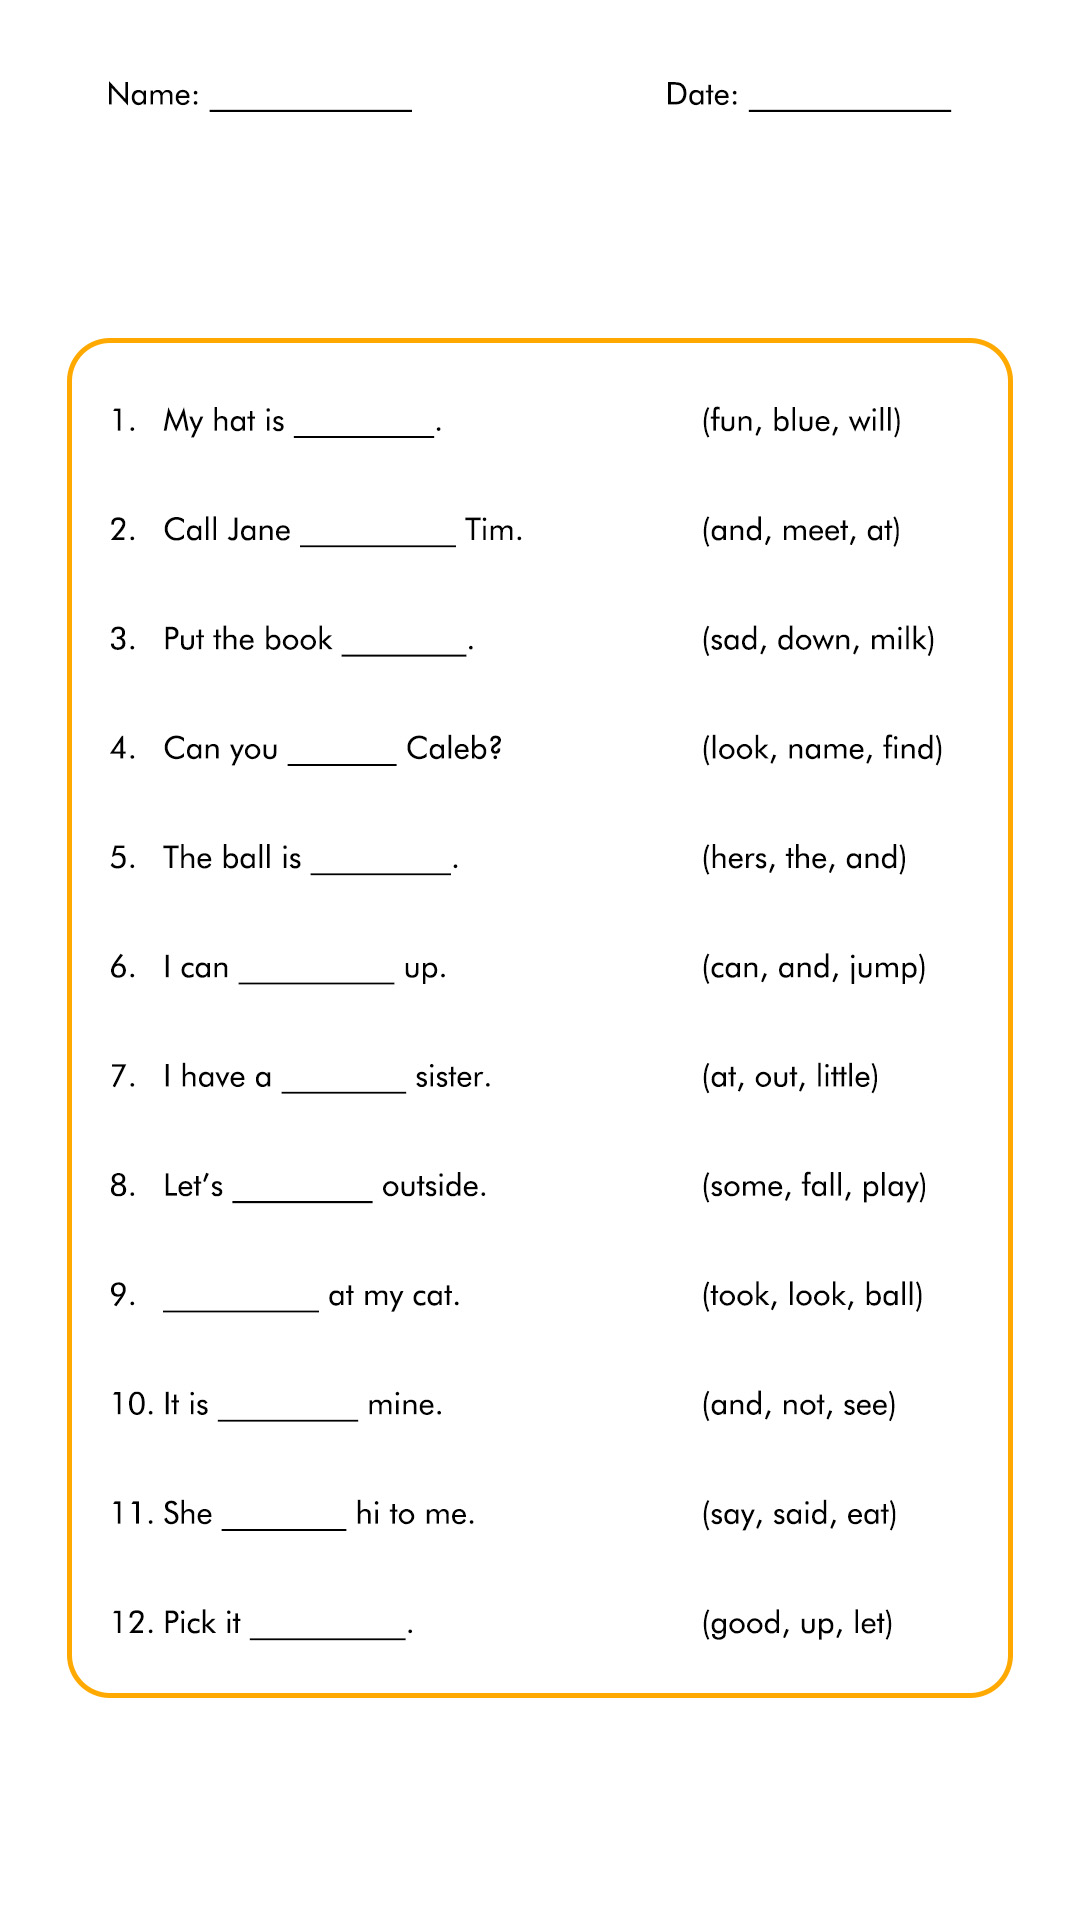 Free Printable Reading Comprehension Worksheets